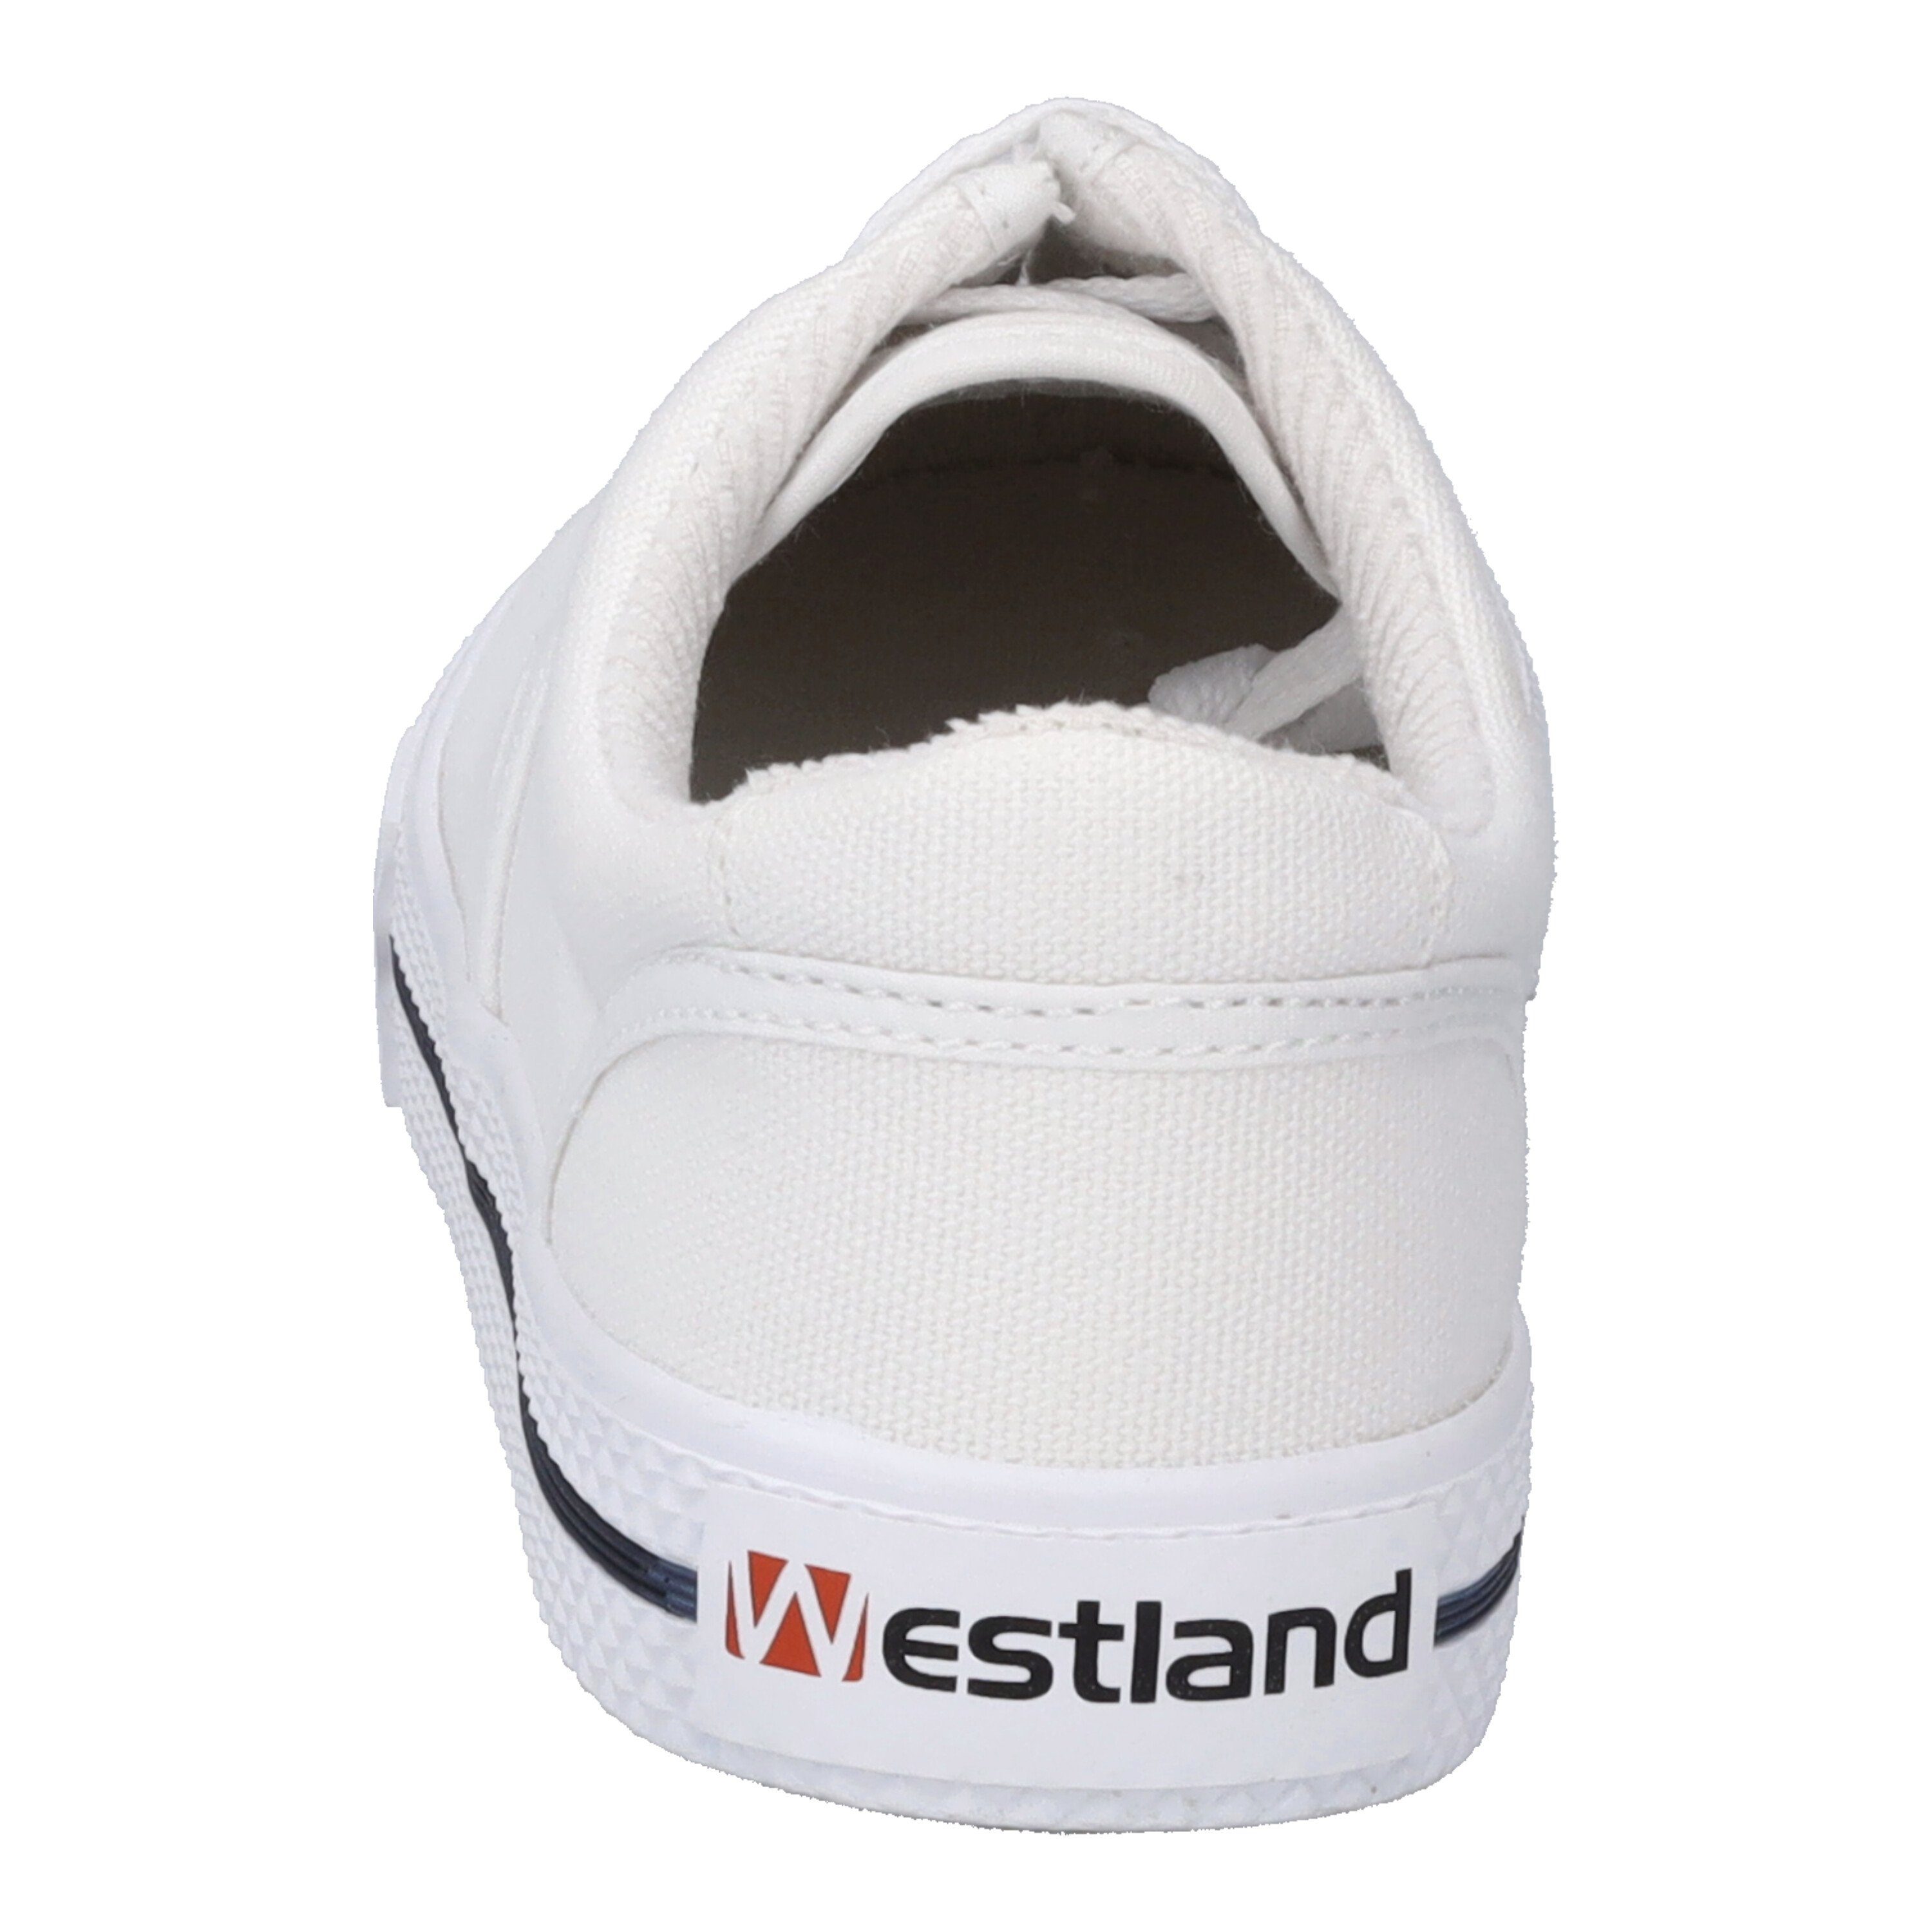 Soling, Westland weiss Sneaker weiß